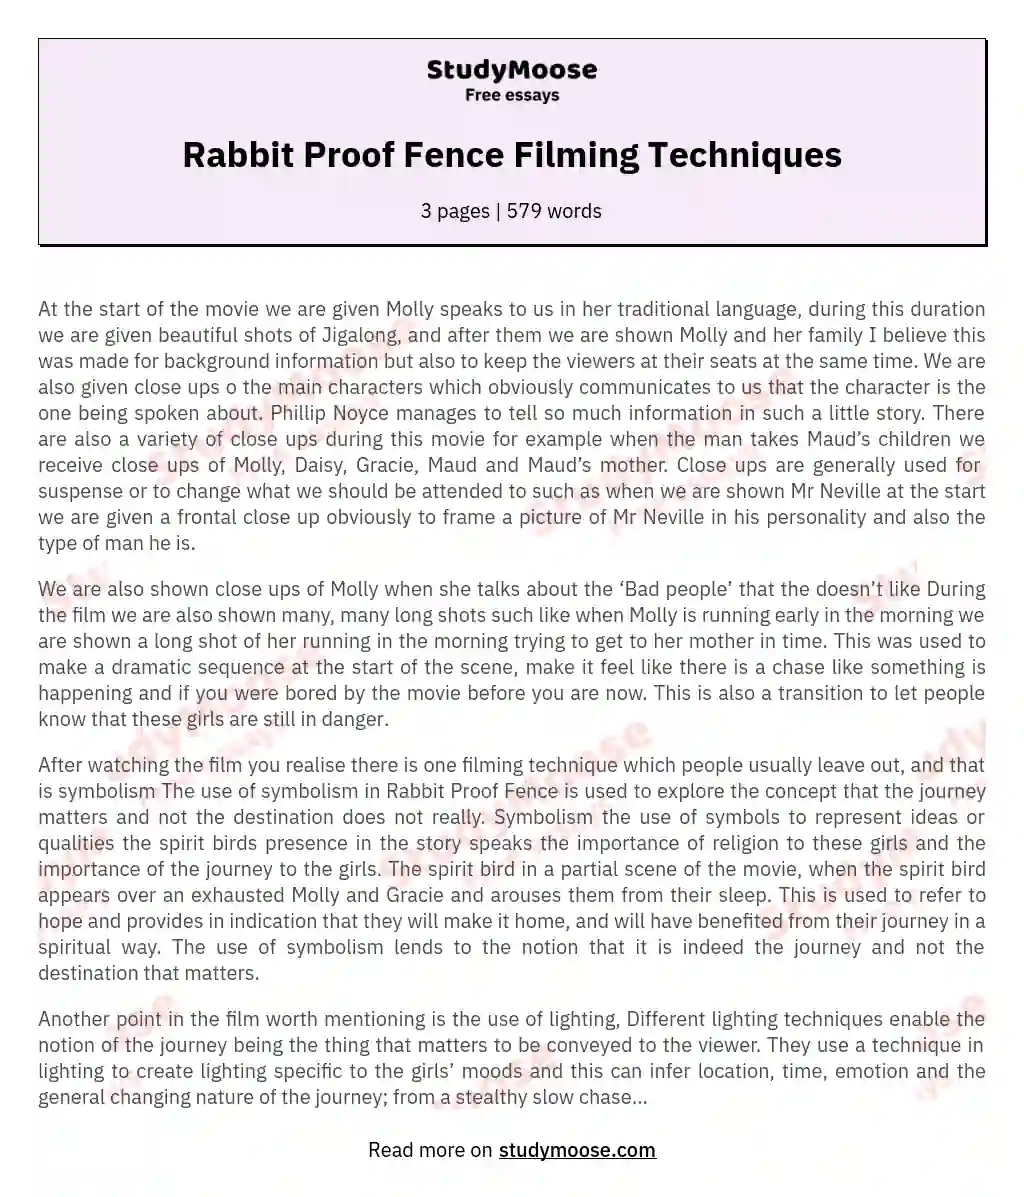 Rabbit Proof Fence Filming Techniques essay